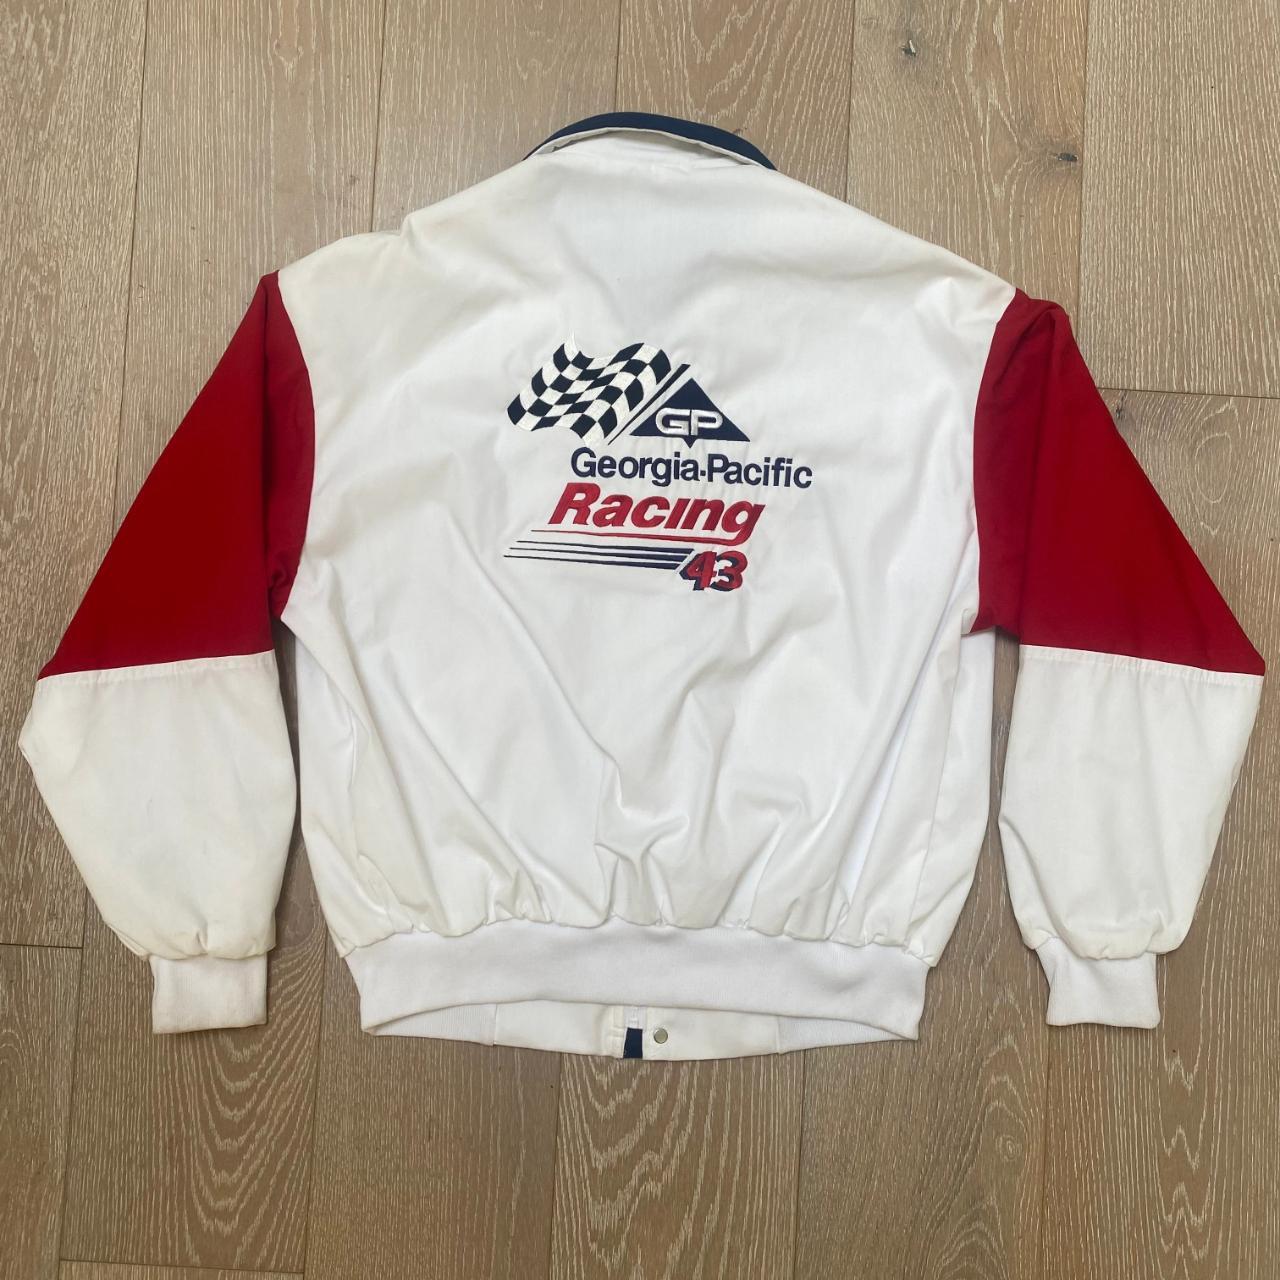 Vintage 80s NASCAR Richard Petty Racing Jacket Size... - Depop